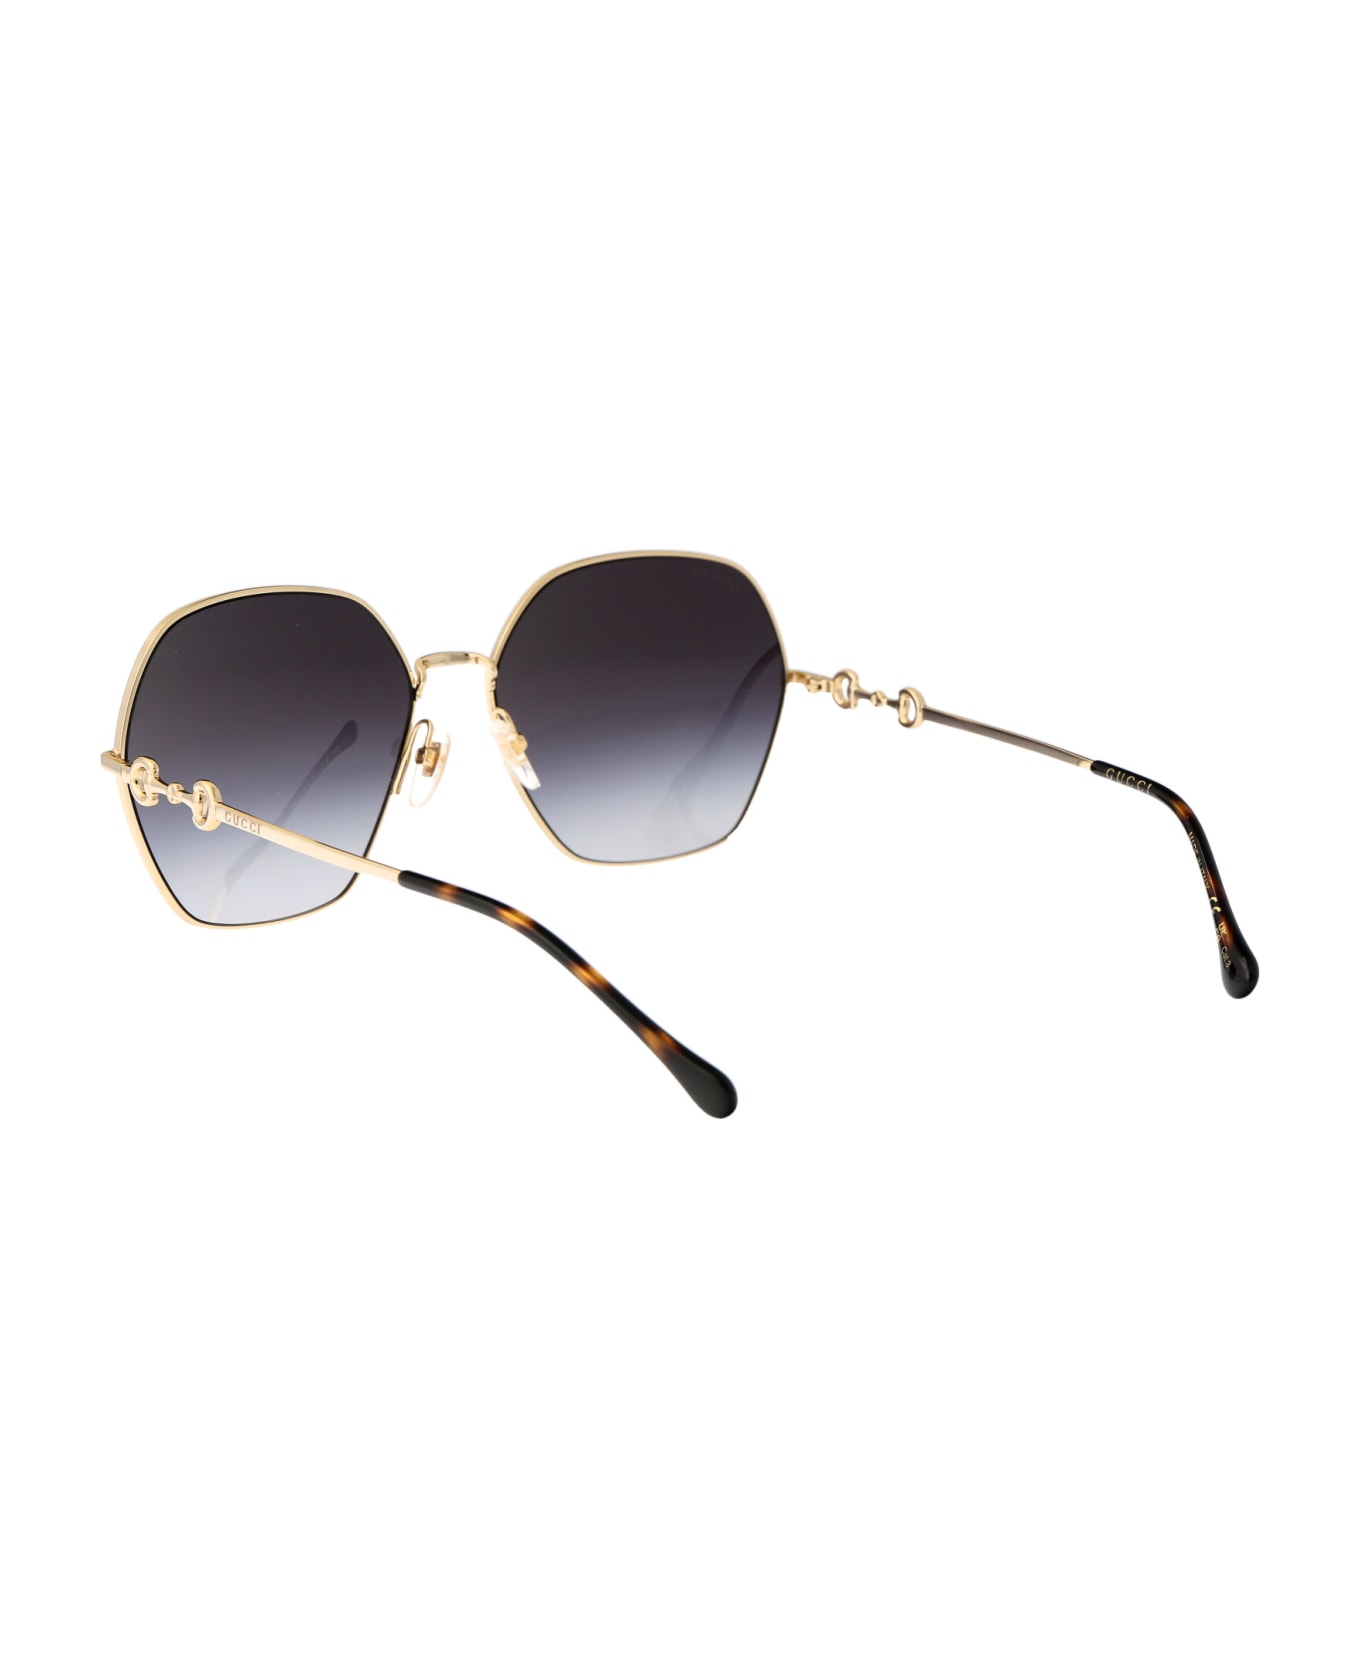 Gucci Eyewear Gg1335s Sunglasses - 001 GOLD GOLD GREY